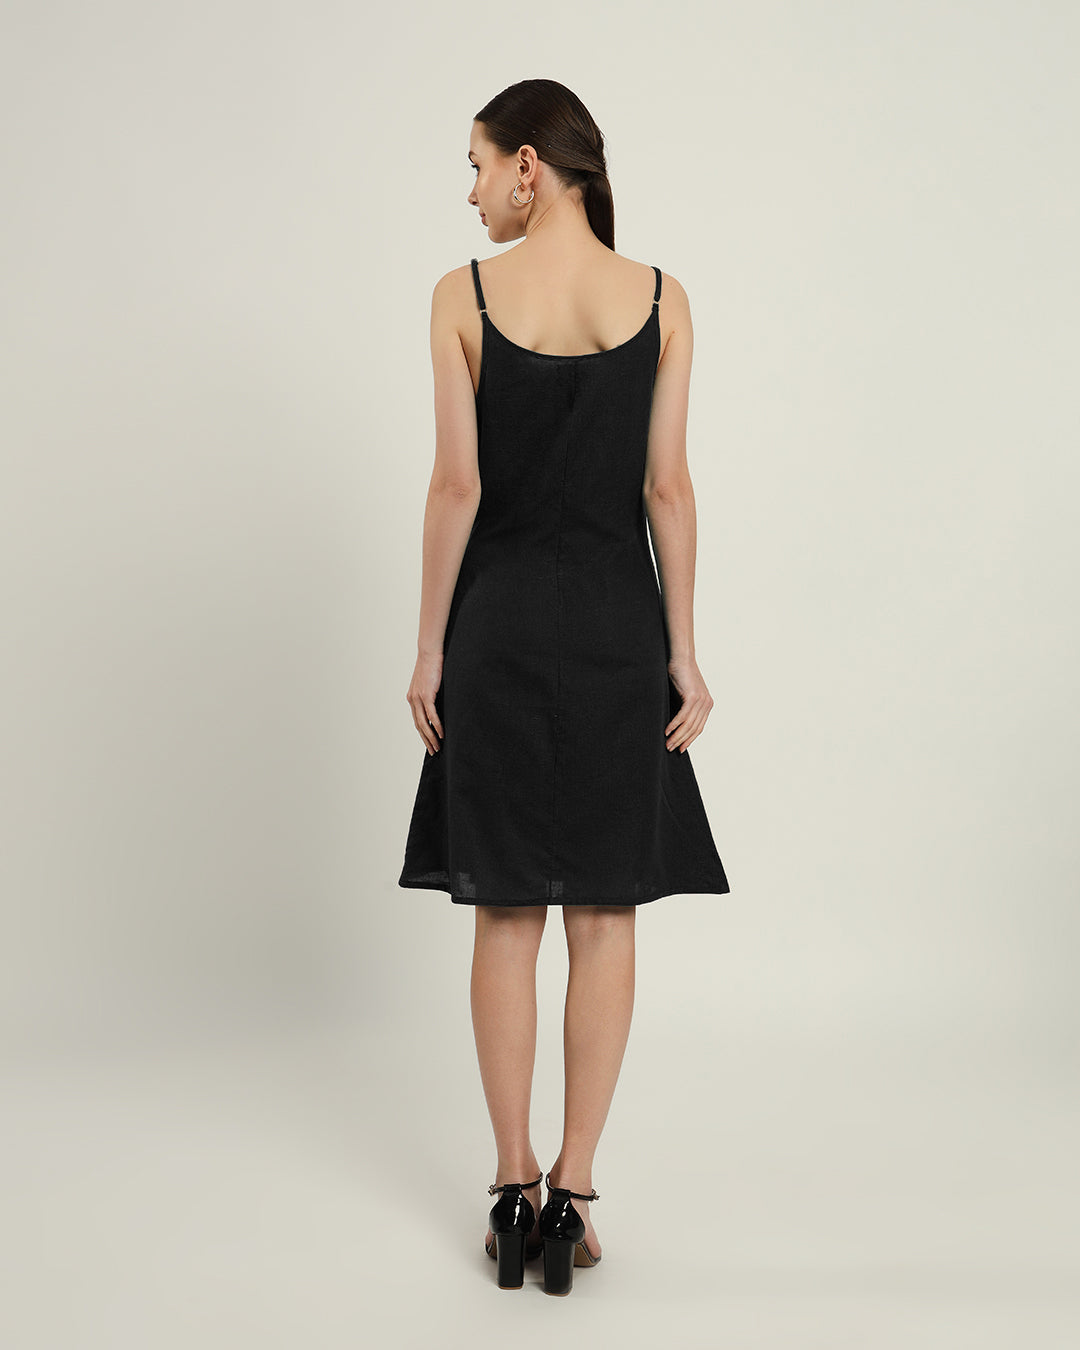 The Chambéry Noir Cotton Dress